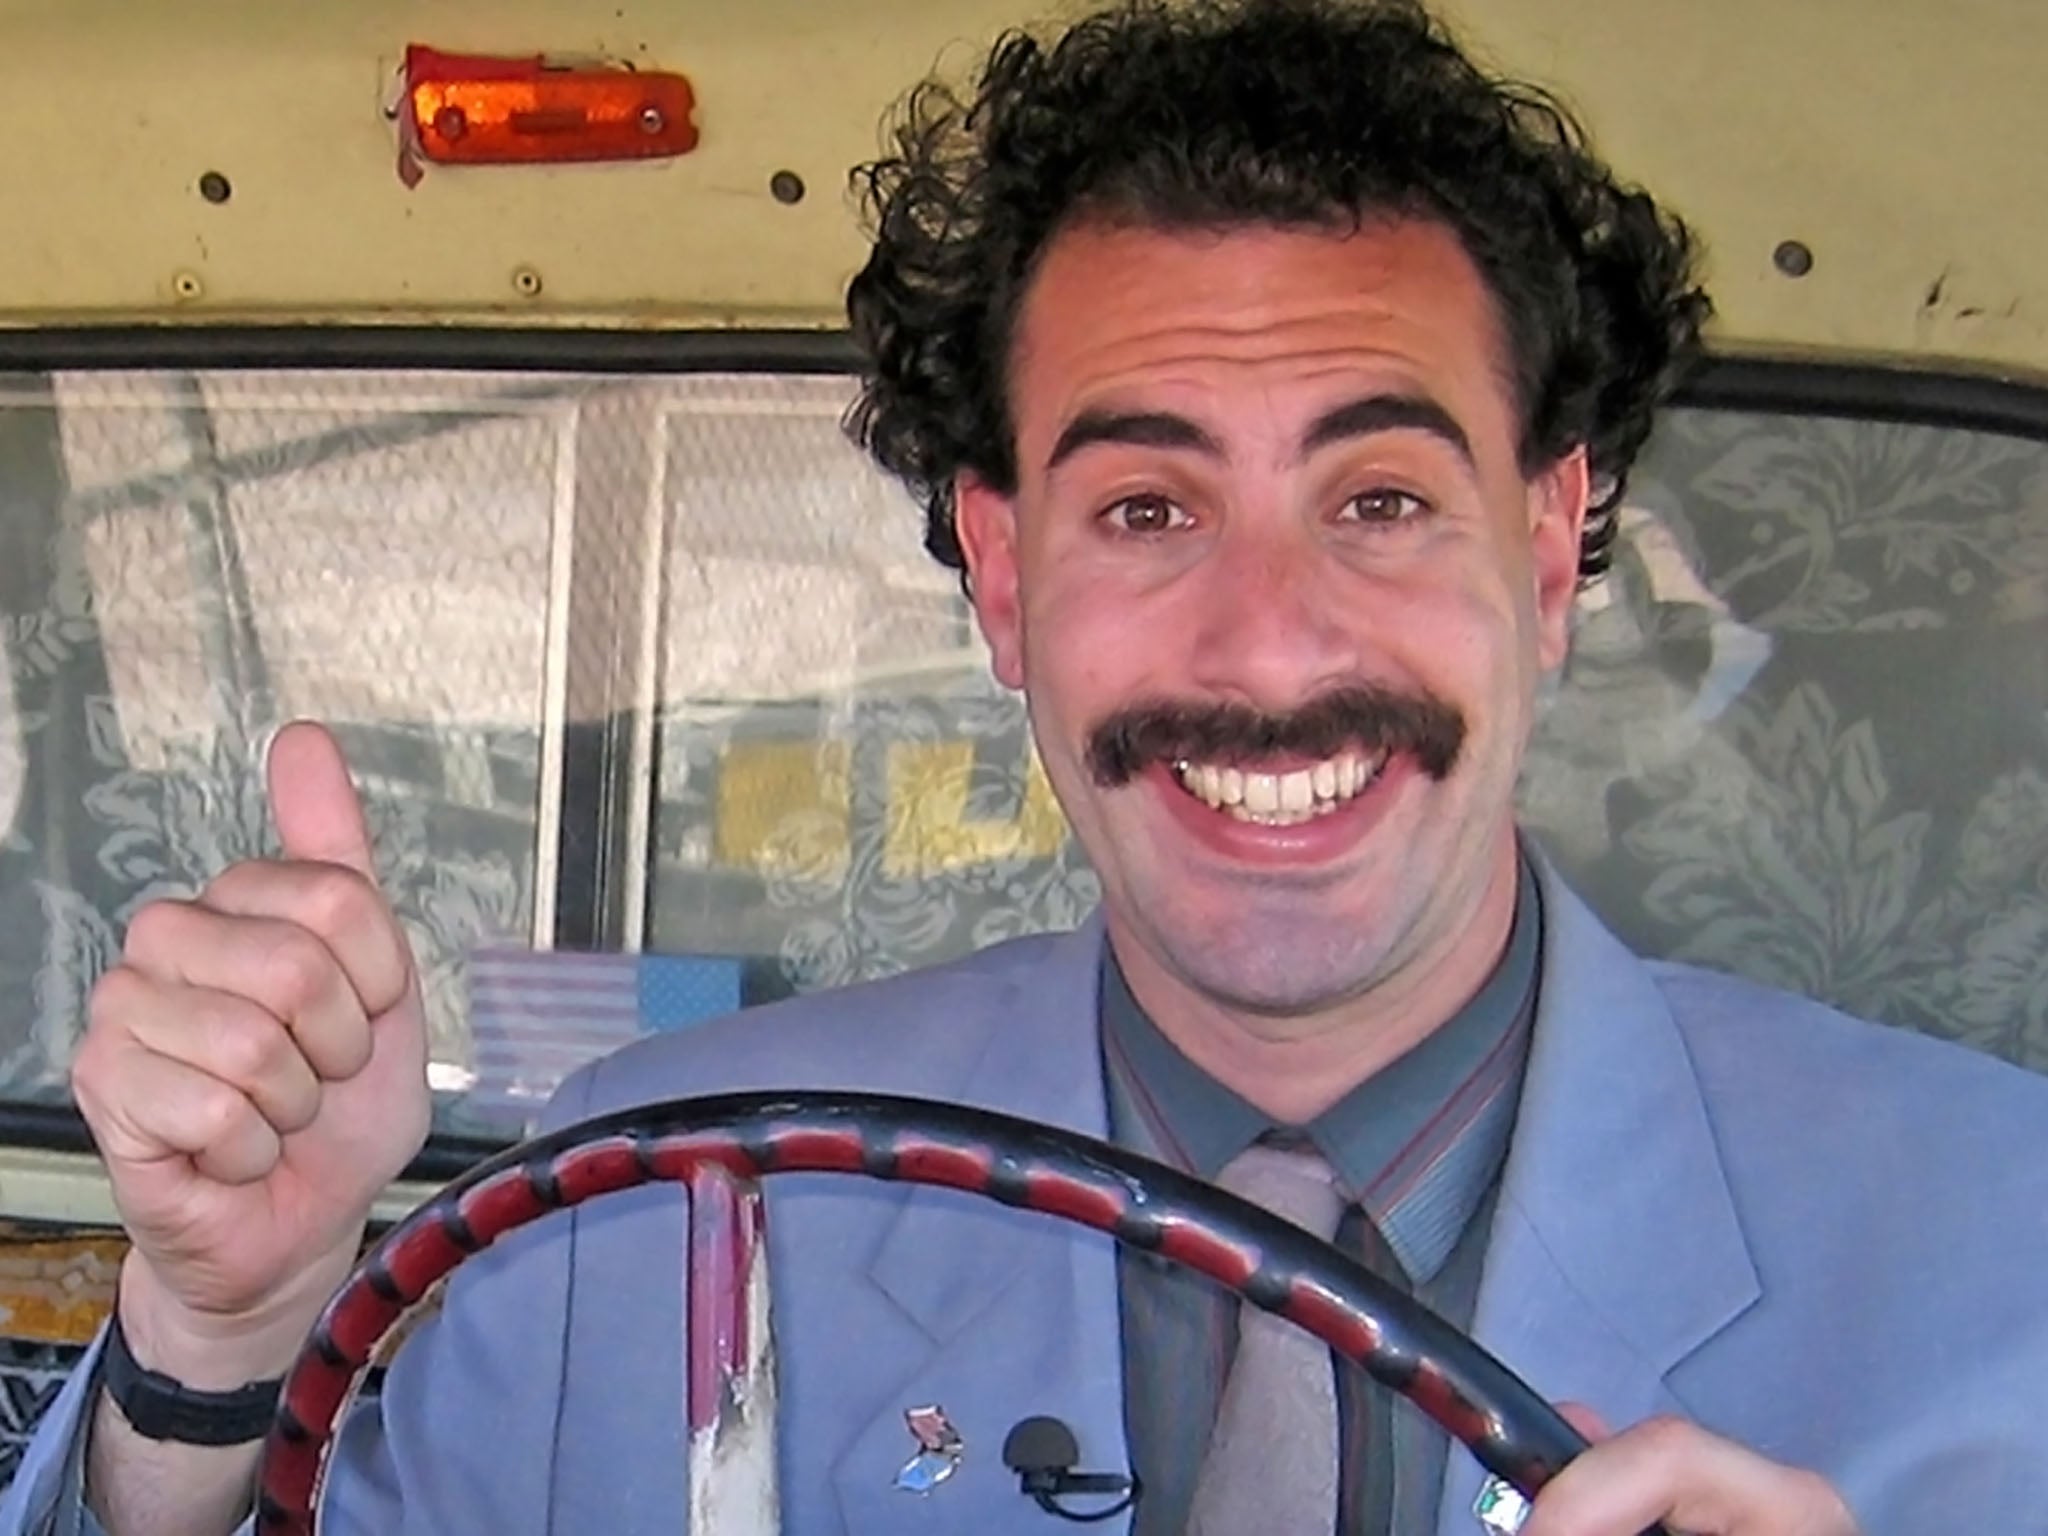 Perceptive, cringeworthy and crude: Sacha Baron Cohen as Borat